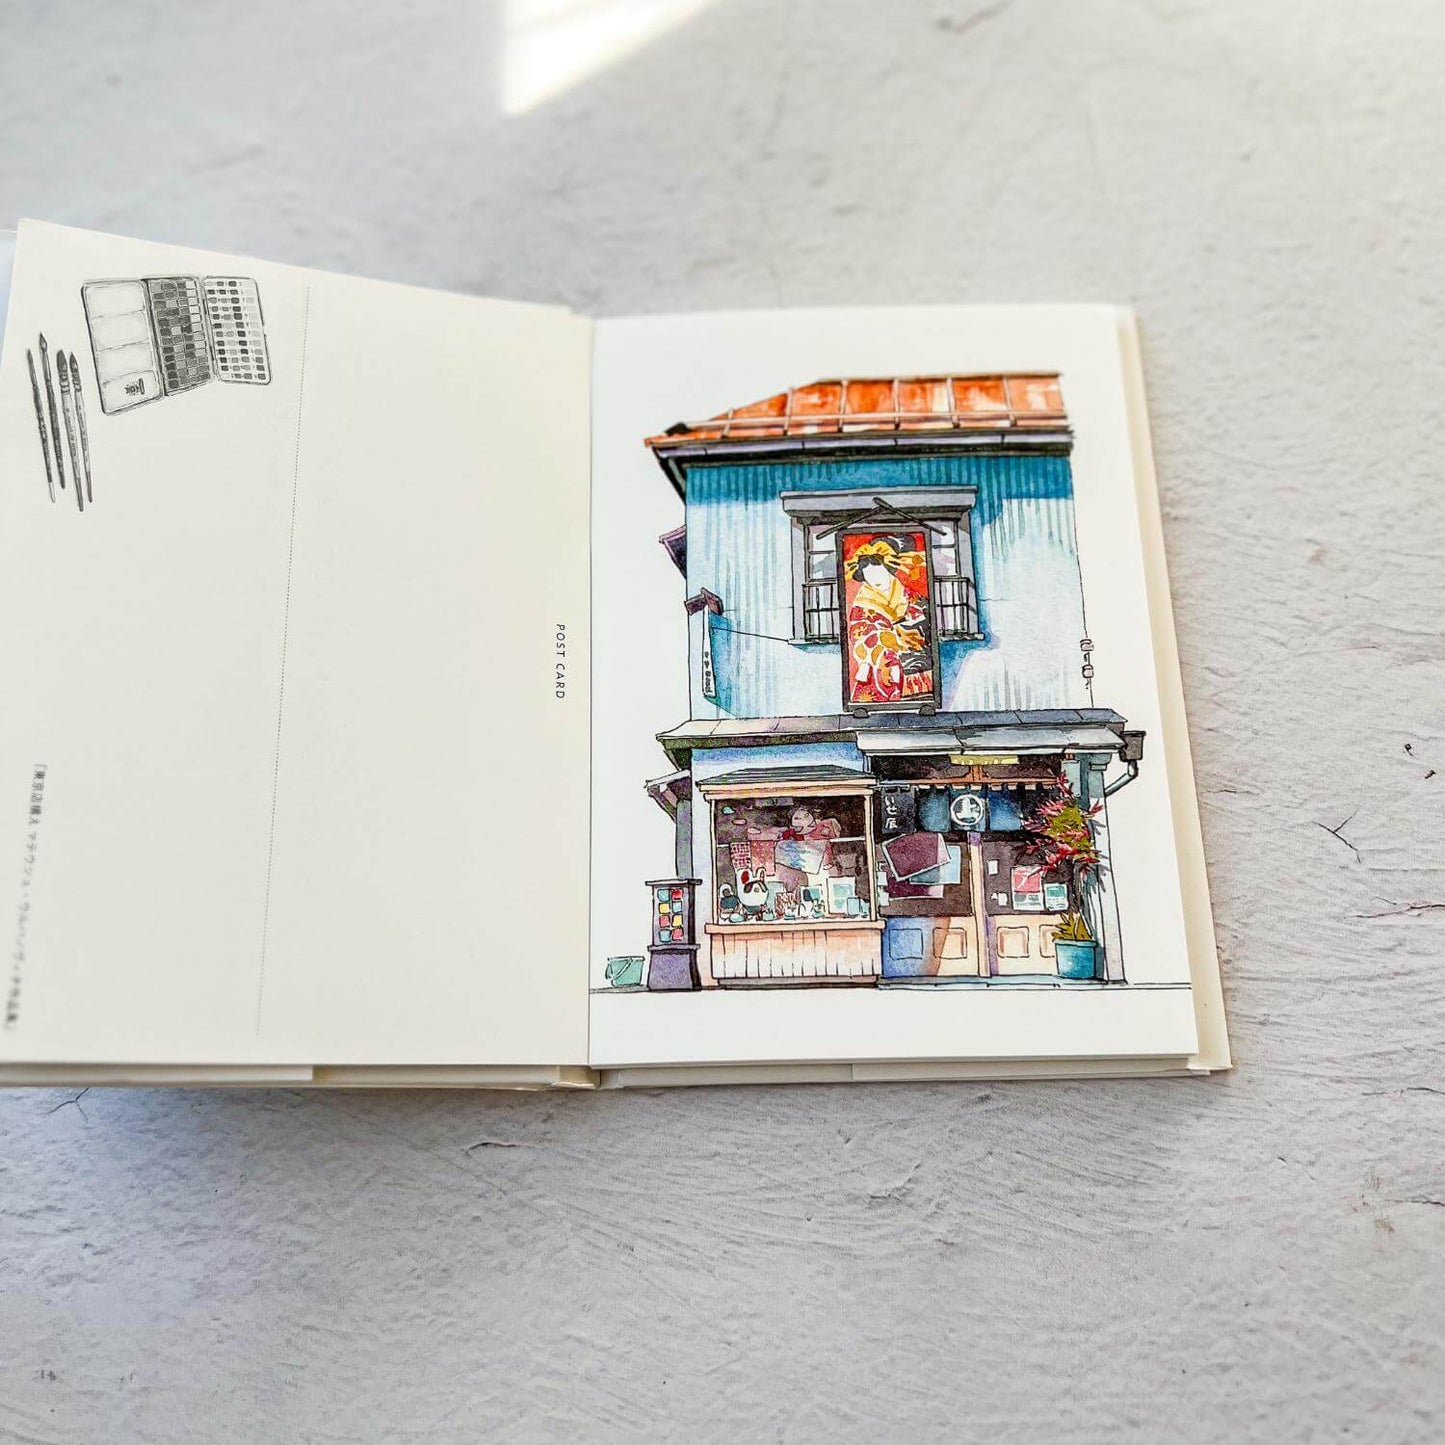 PostCard Book  "Tokyo Storefronts" Mateusz Urbanowicz